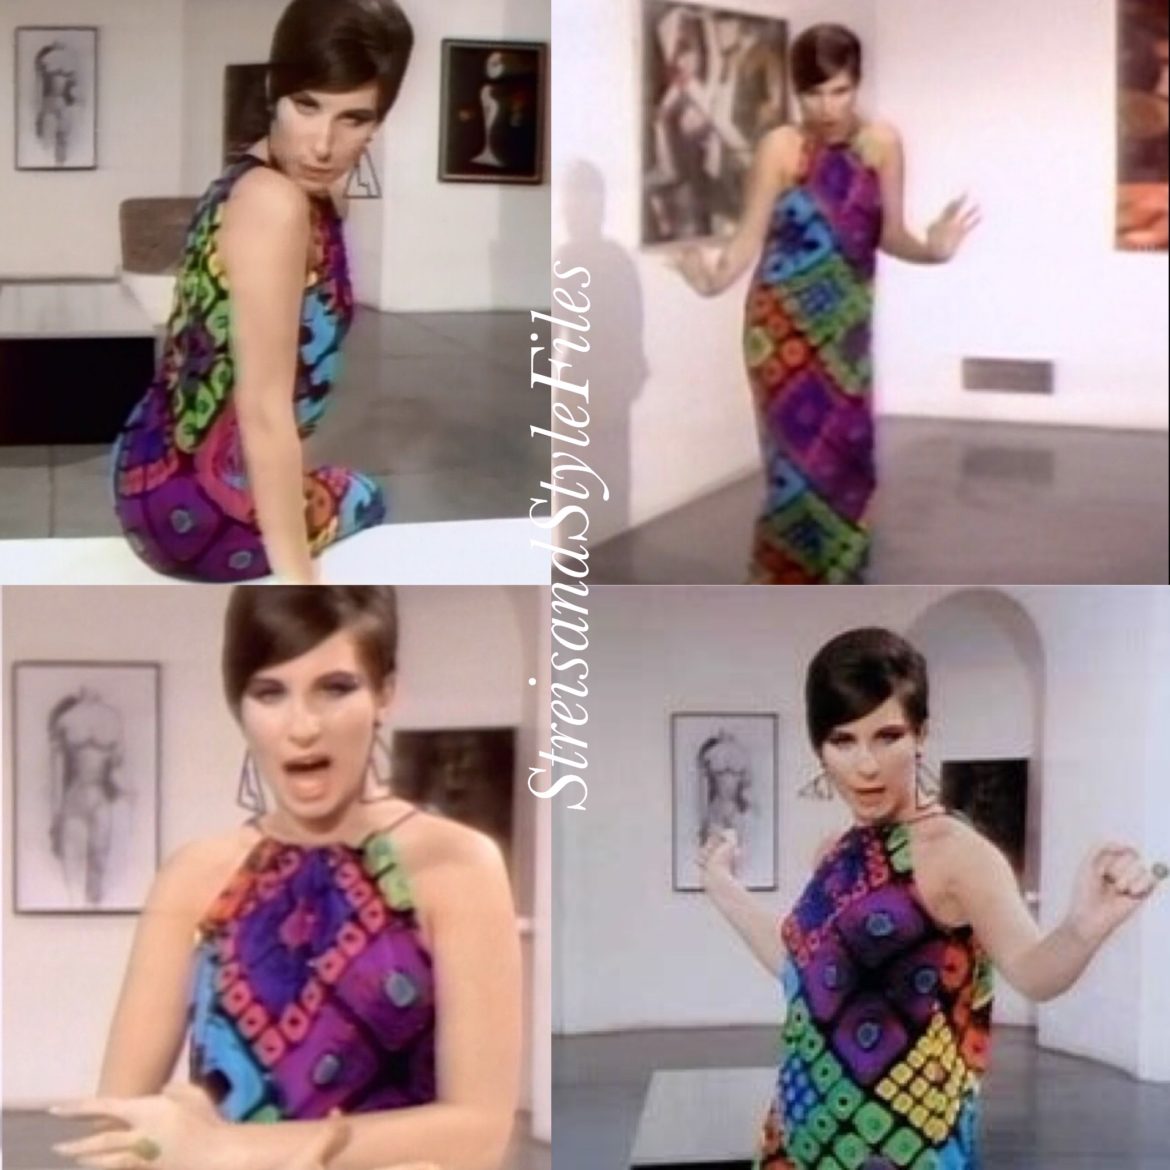 Color Me Barbra “Gotta Move” dress by Ken Scott